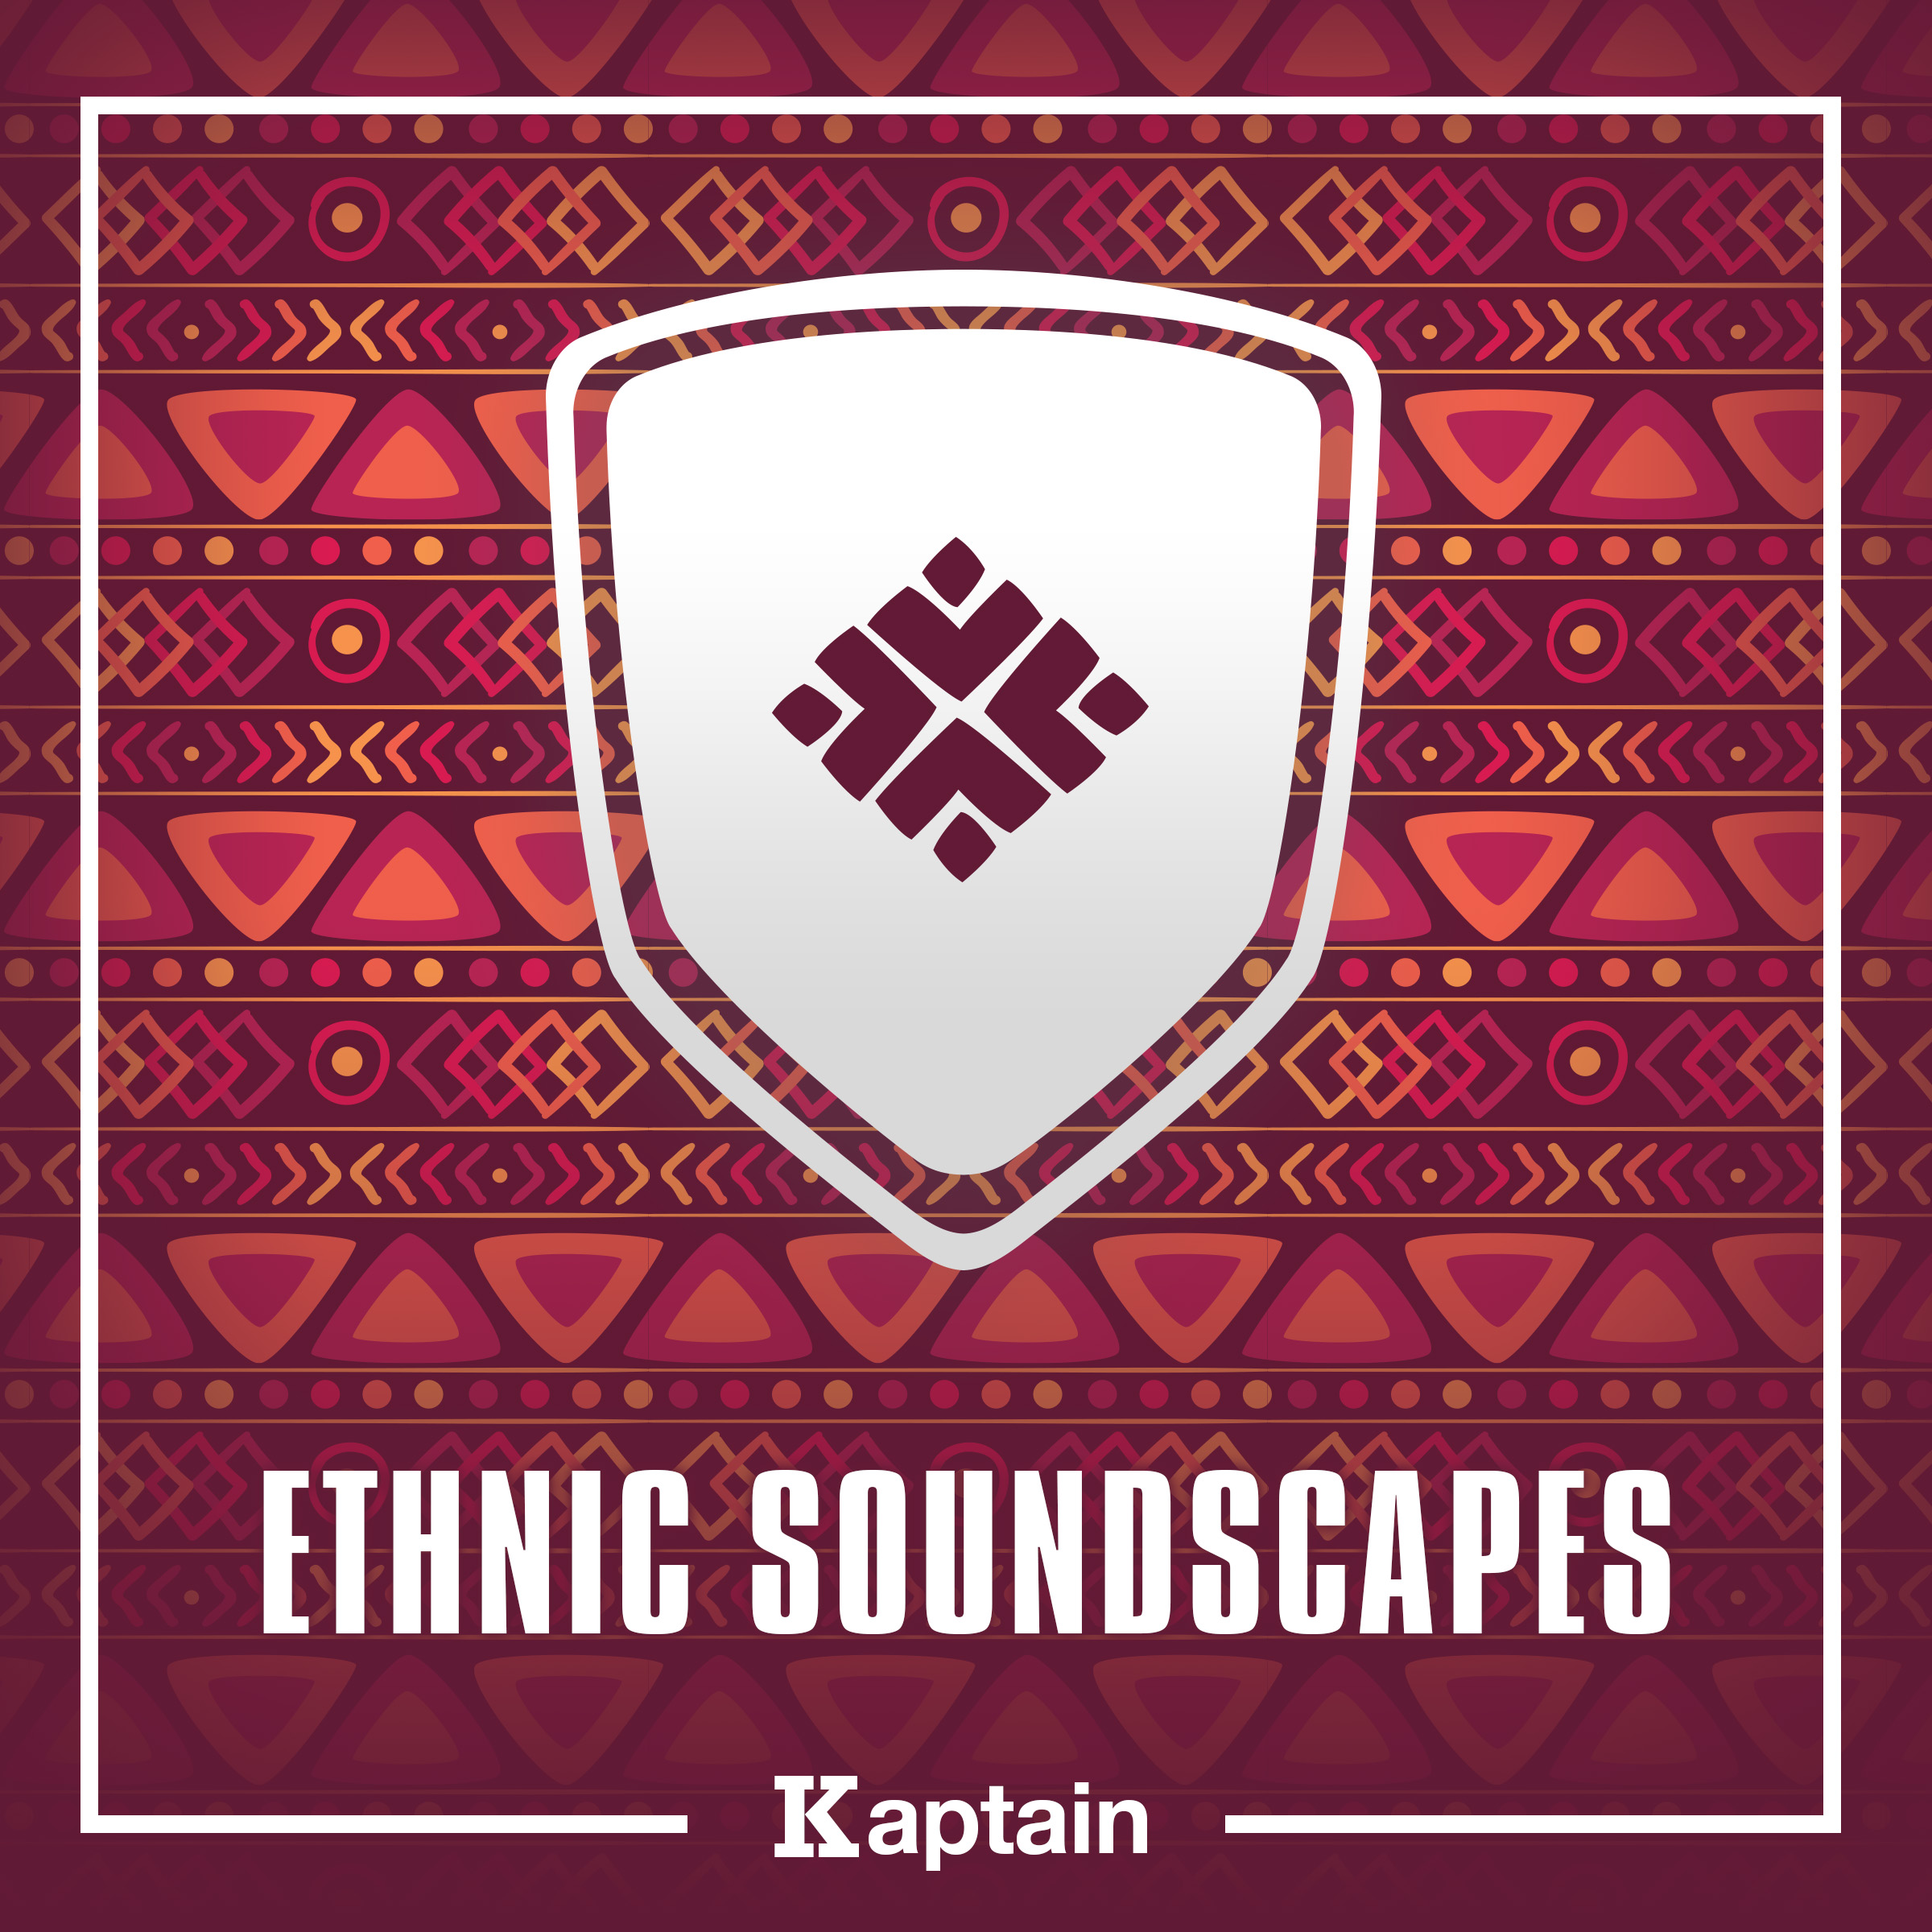 Ethnic Soundscapes